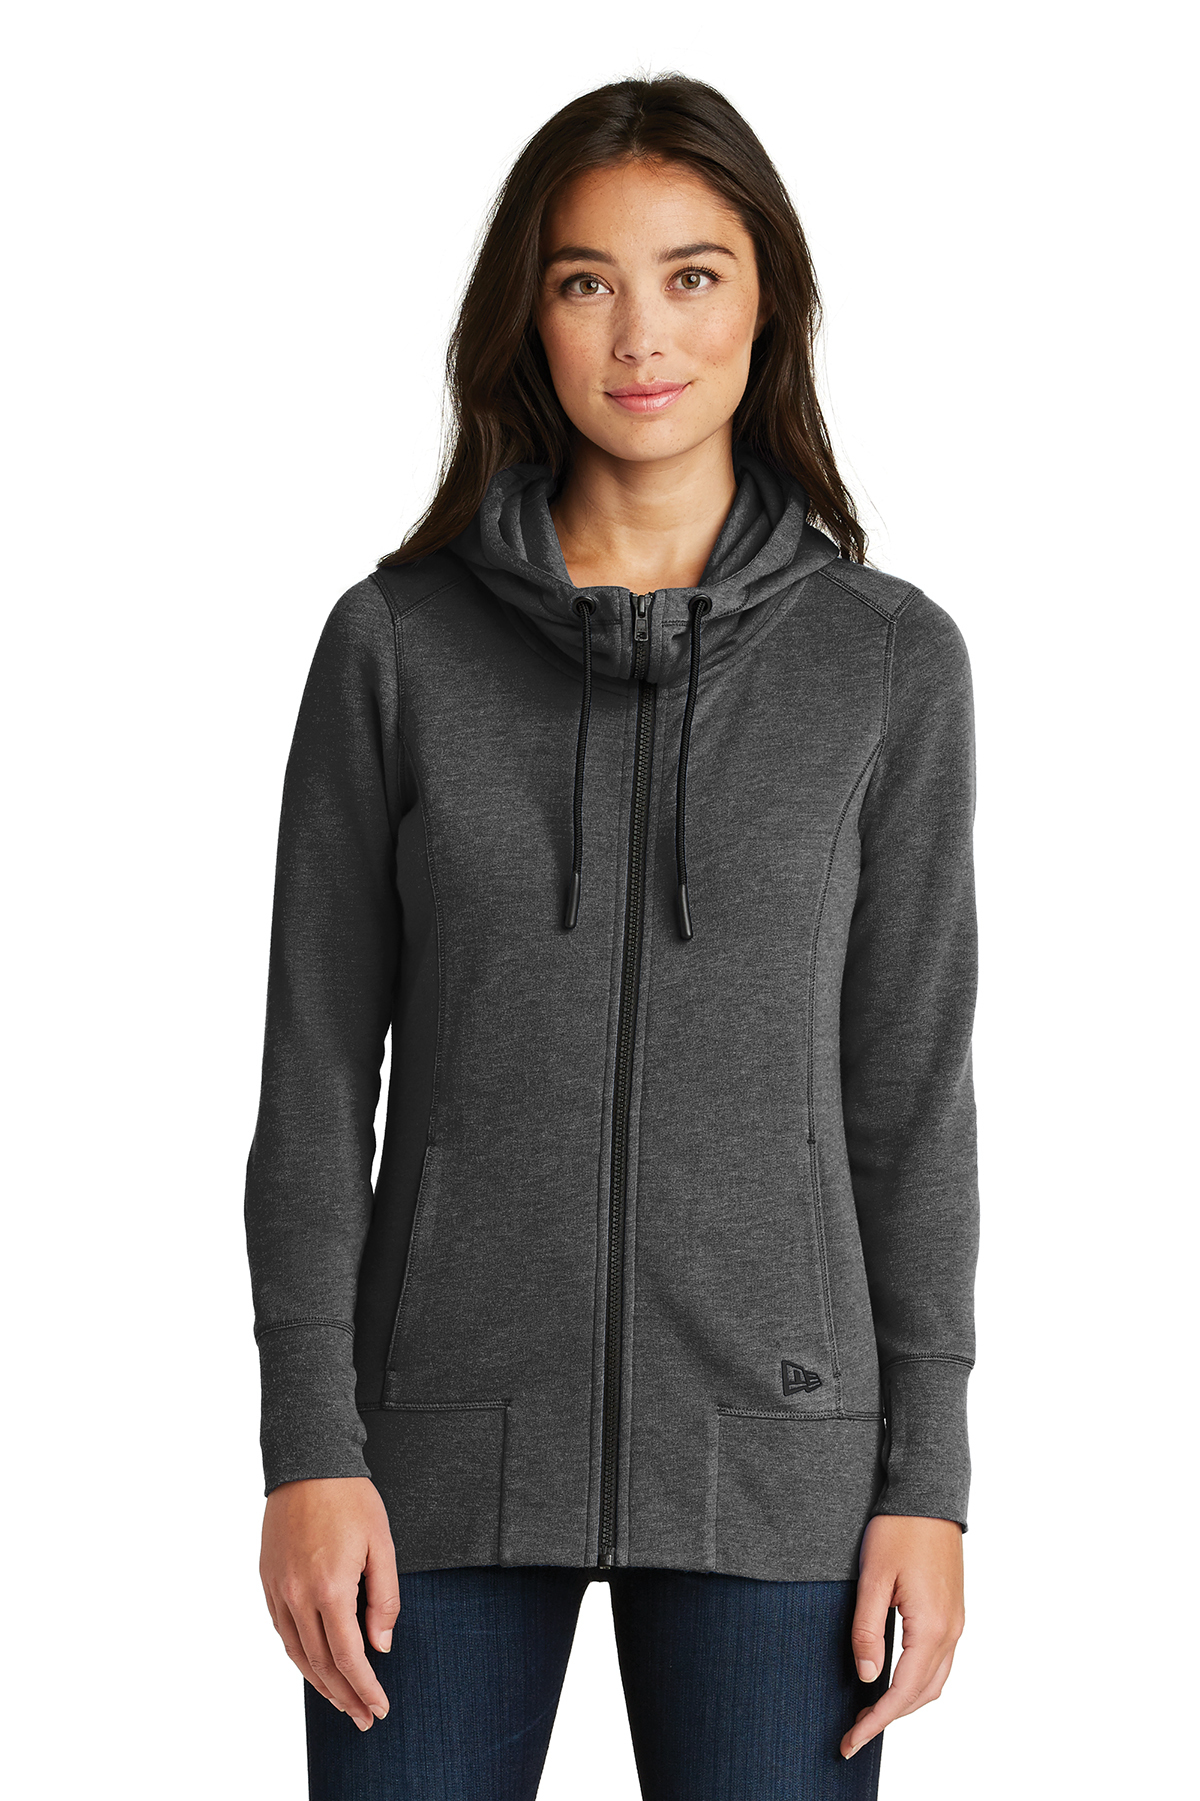 New Era ® Ladies Tri-Blend Fleece Full-Zip Hoodie | Product | Company ...